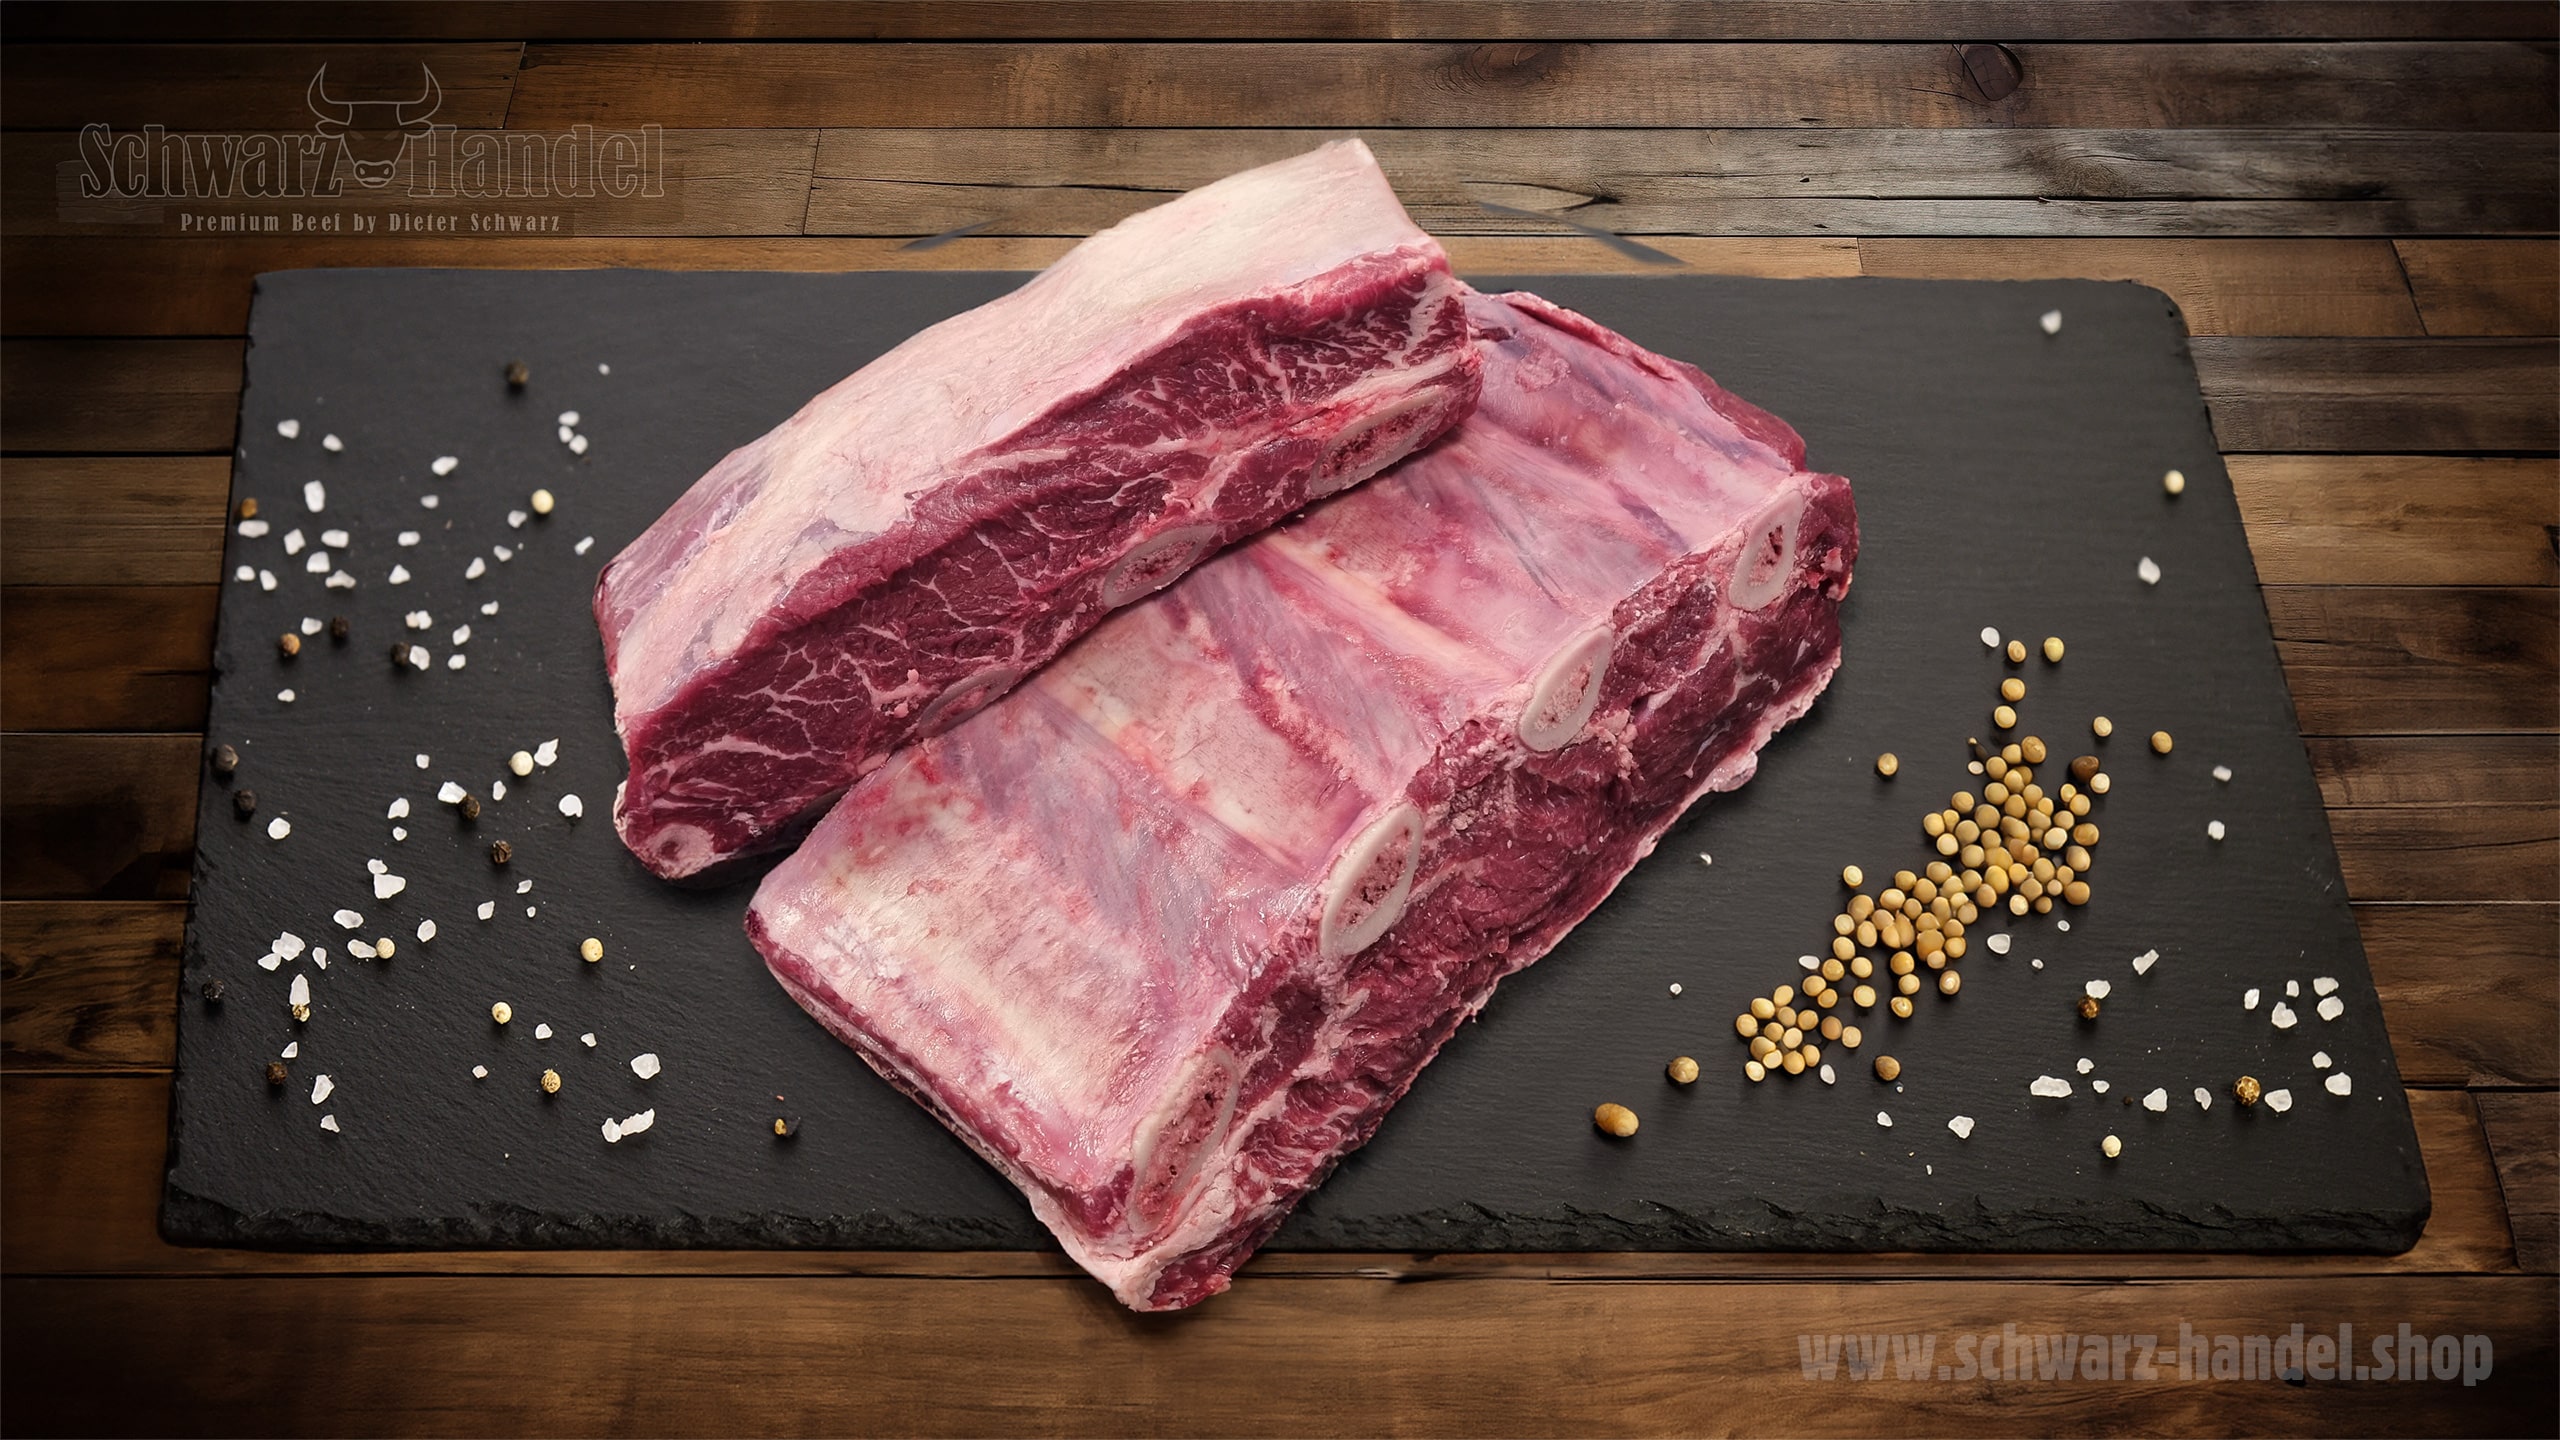 Asado Beef Ribs SchwarzHandel Rindfleisch Rindfleischprodukte Rindfleischprodukt Rindfleischerzeugnisse Rindfleischerzeugnis Beef BeefStore Premiumbeef Premium Beef